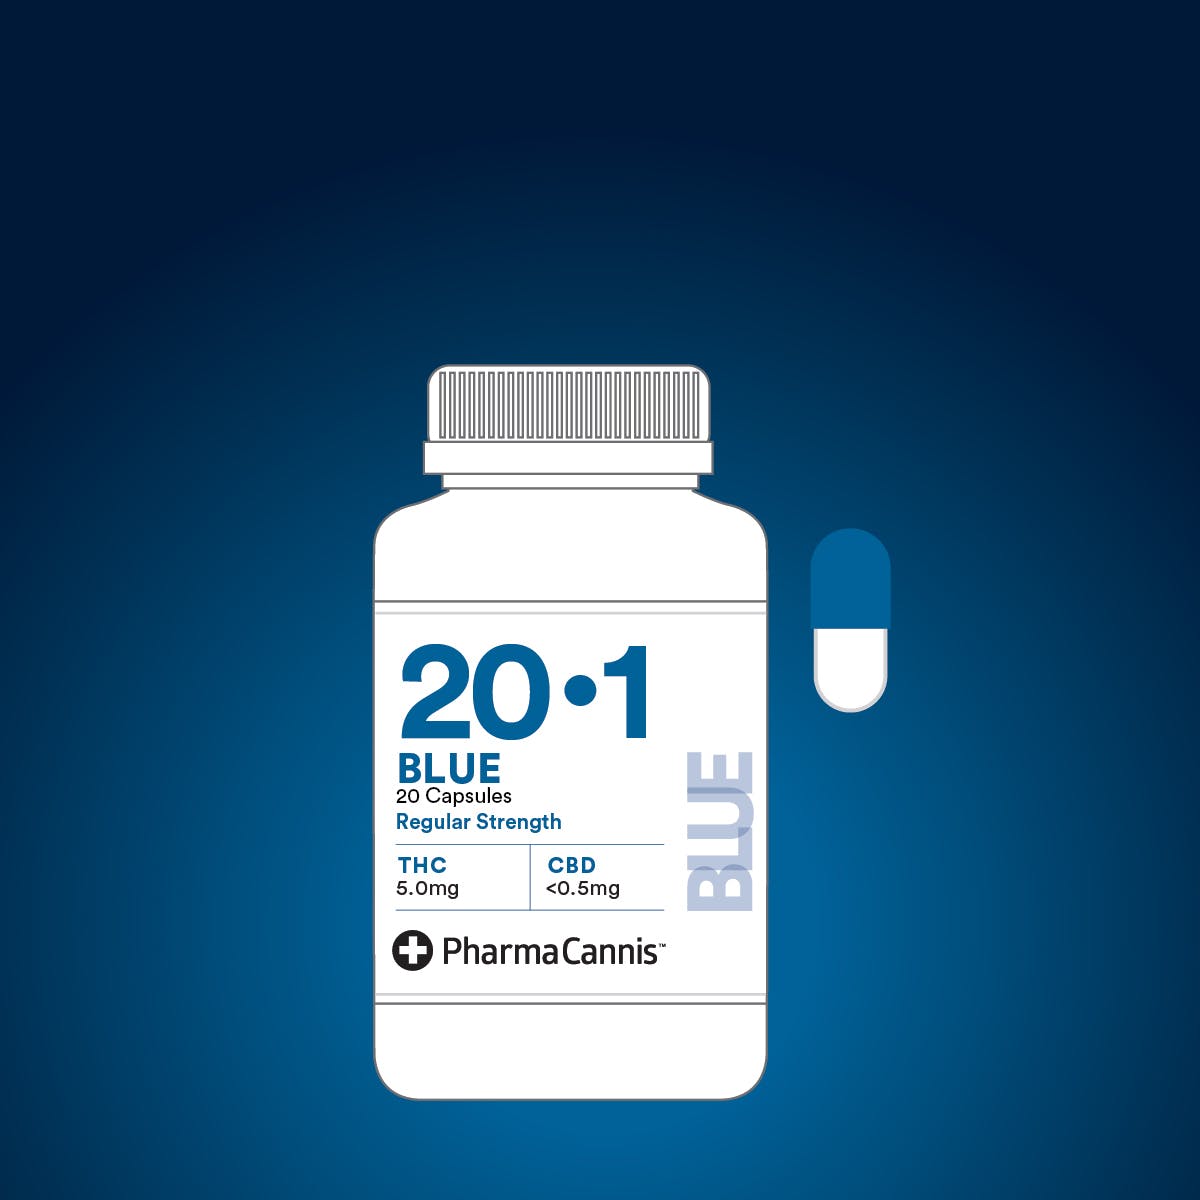 marijuana-dispensaries-pharmacannis-amherst-in-amherst-blue-regular-strength-capsule-201-20ct